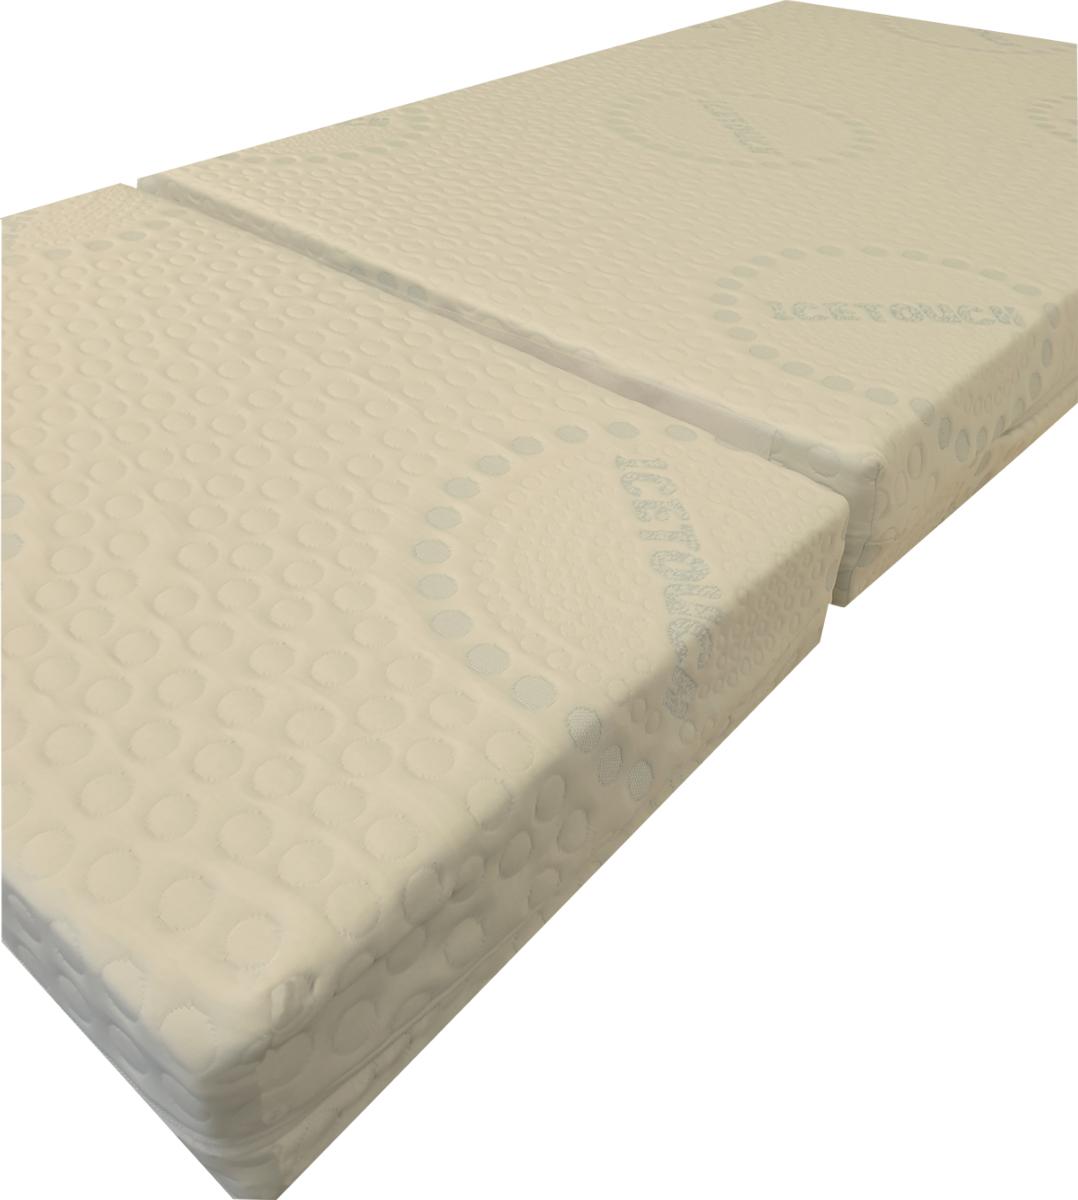 Convertible mattress 90 x 140 x 15 cm "ice touch fabric" + extension 90 x 50 x 15 cm